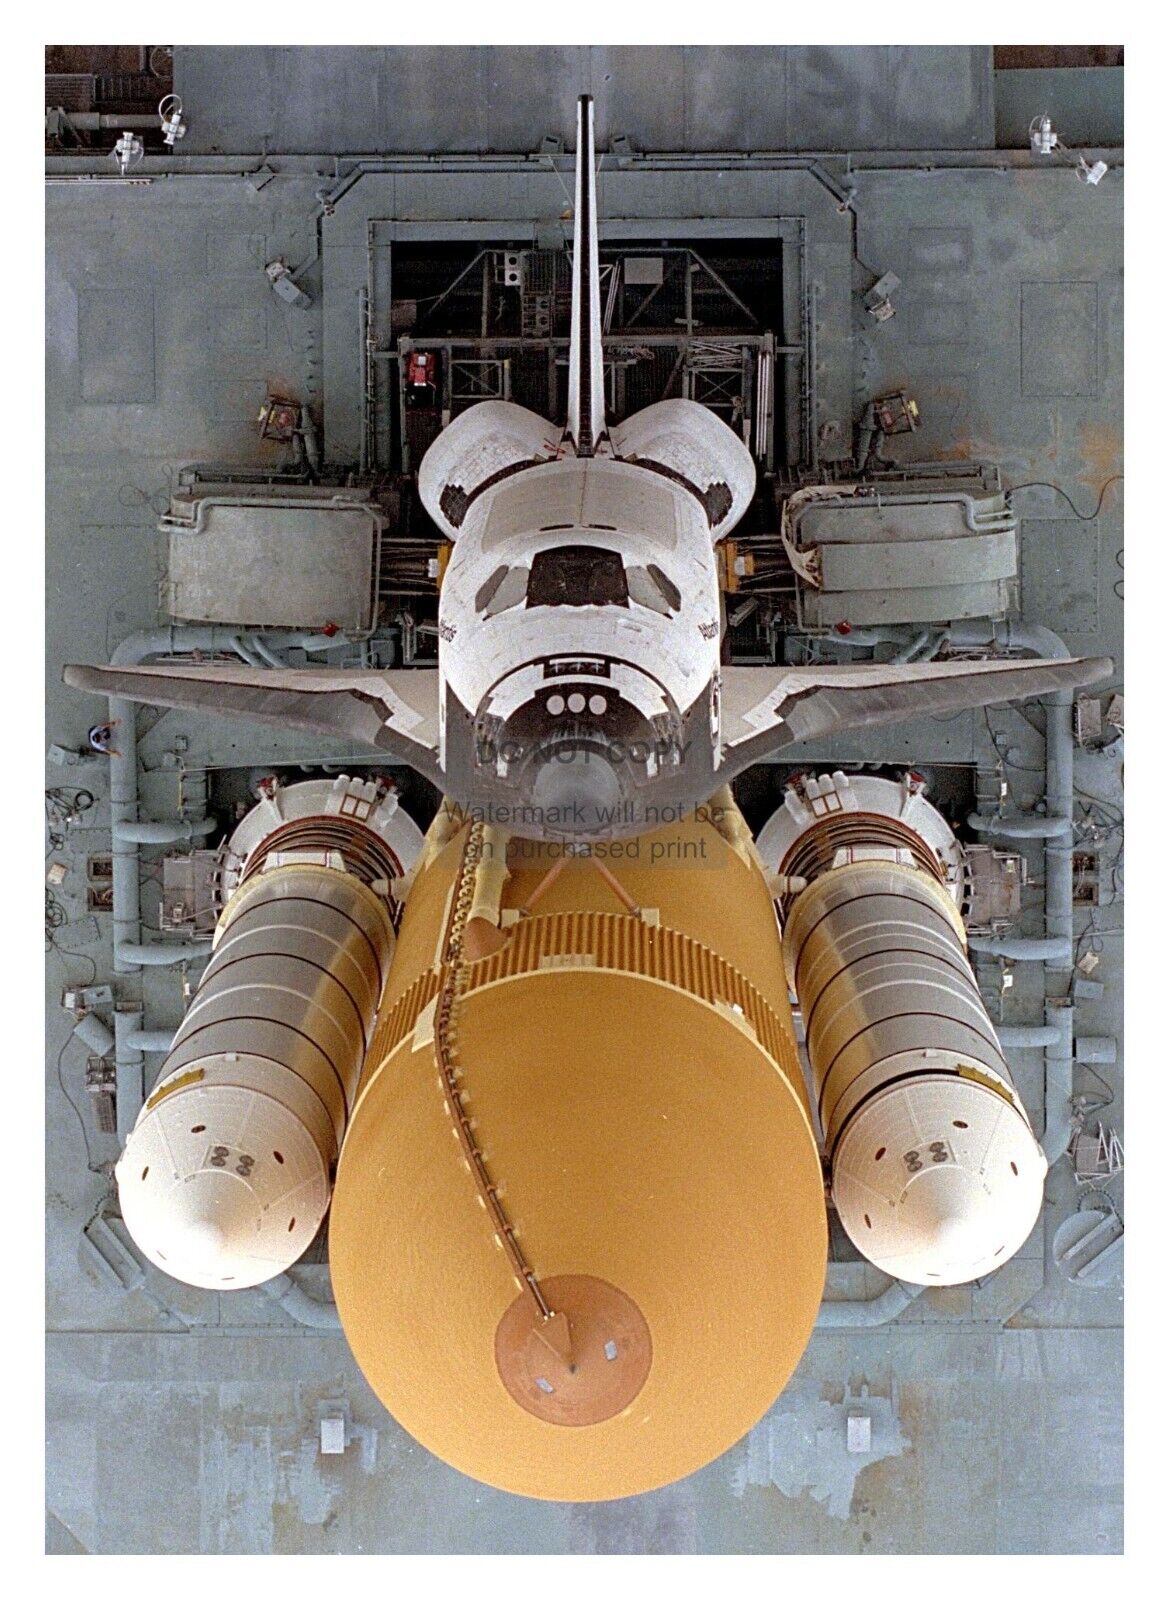 ATLANTIS SHUTTLE PREPARING TO LAUNCH STS-79 OVERHEAD VIEW 5X7 PHOTO REPRINT